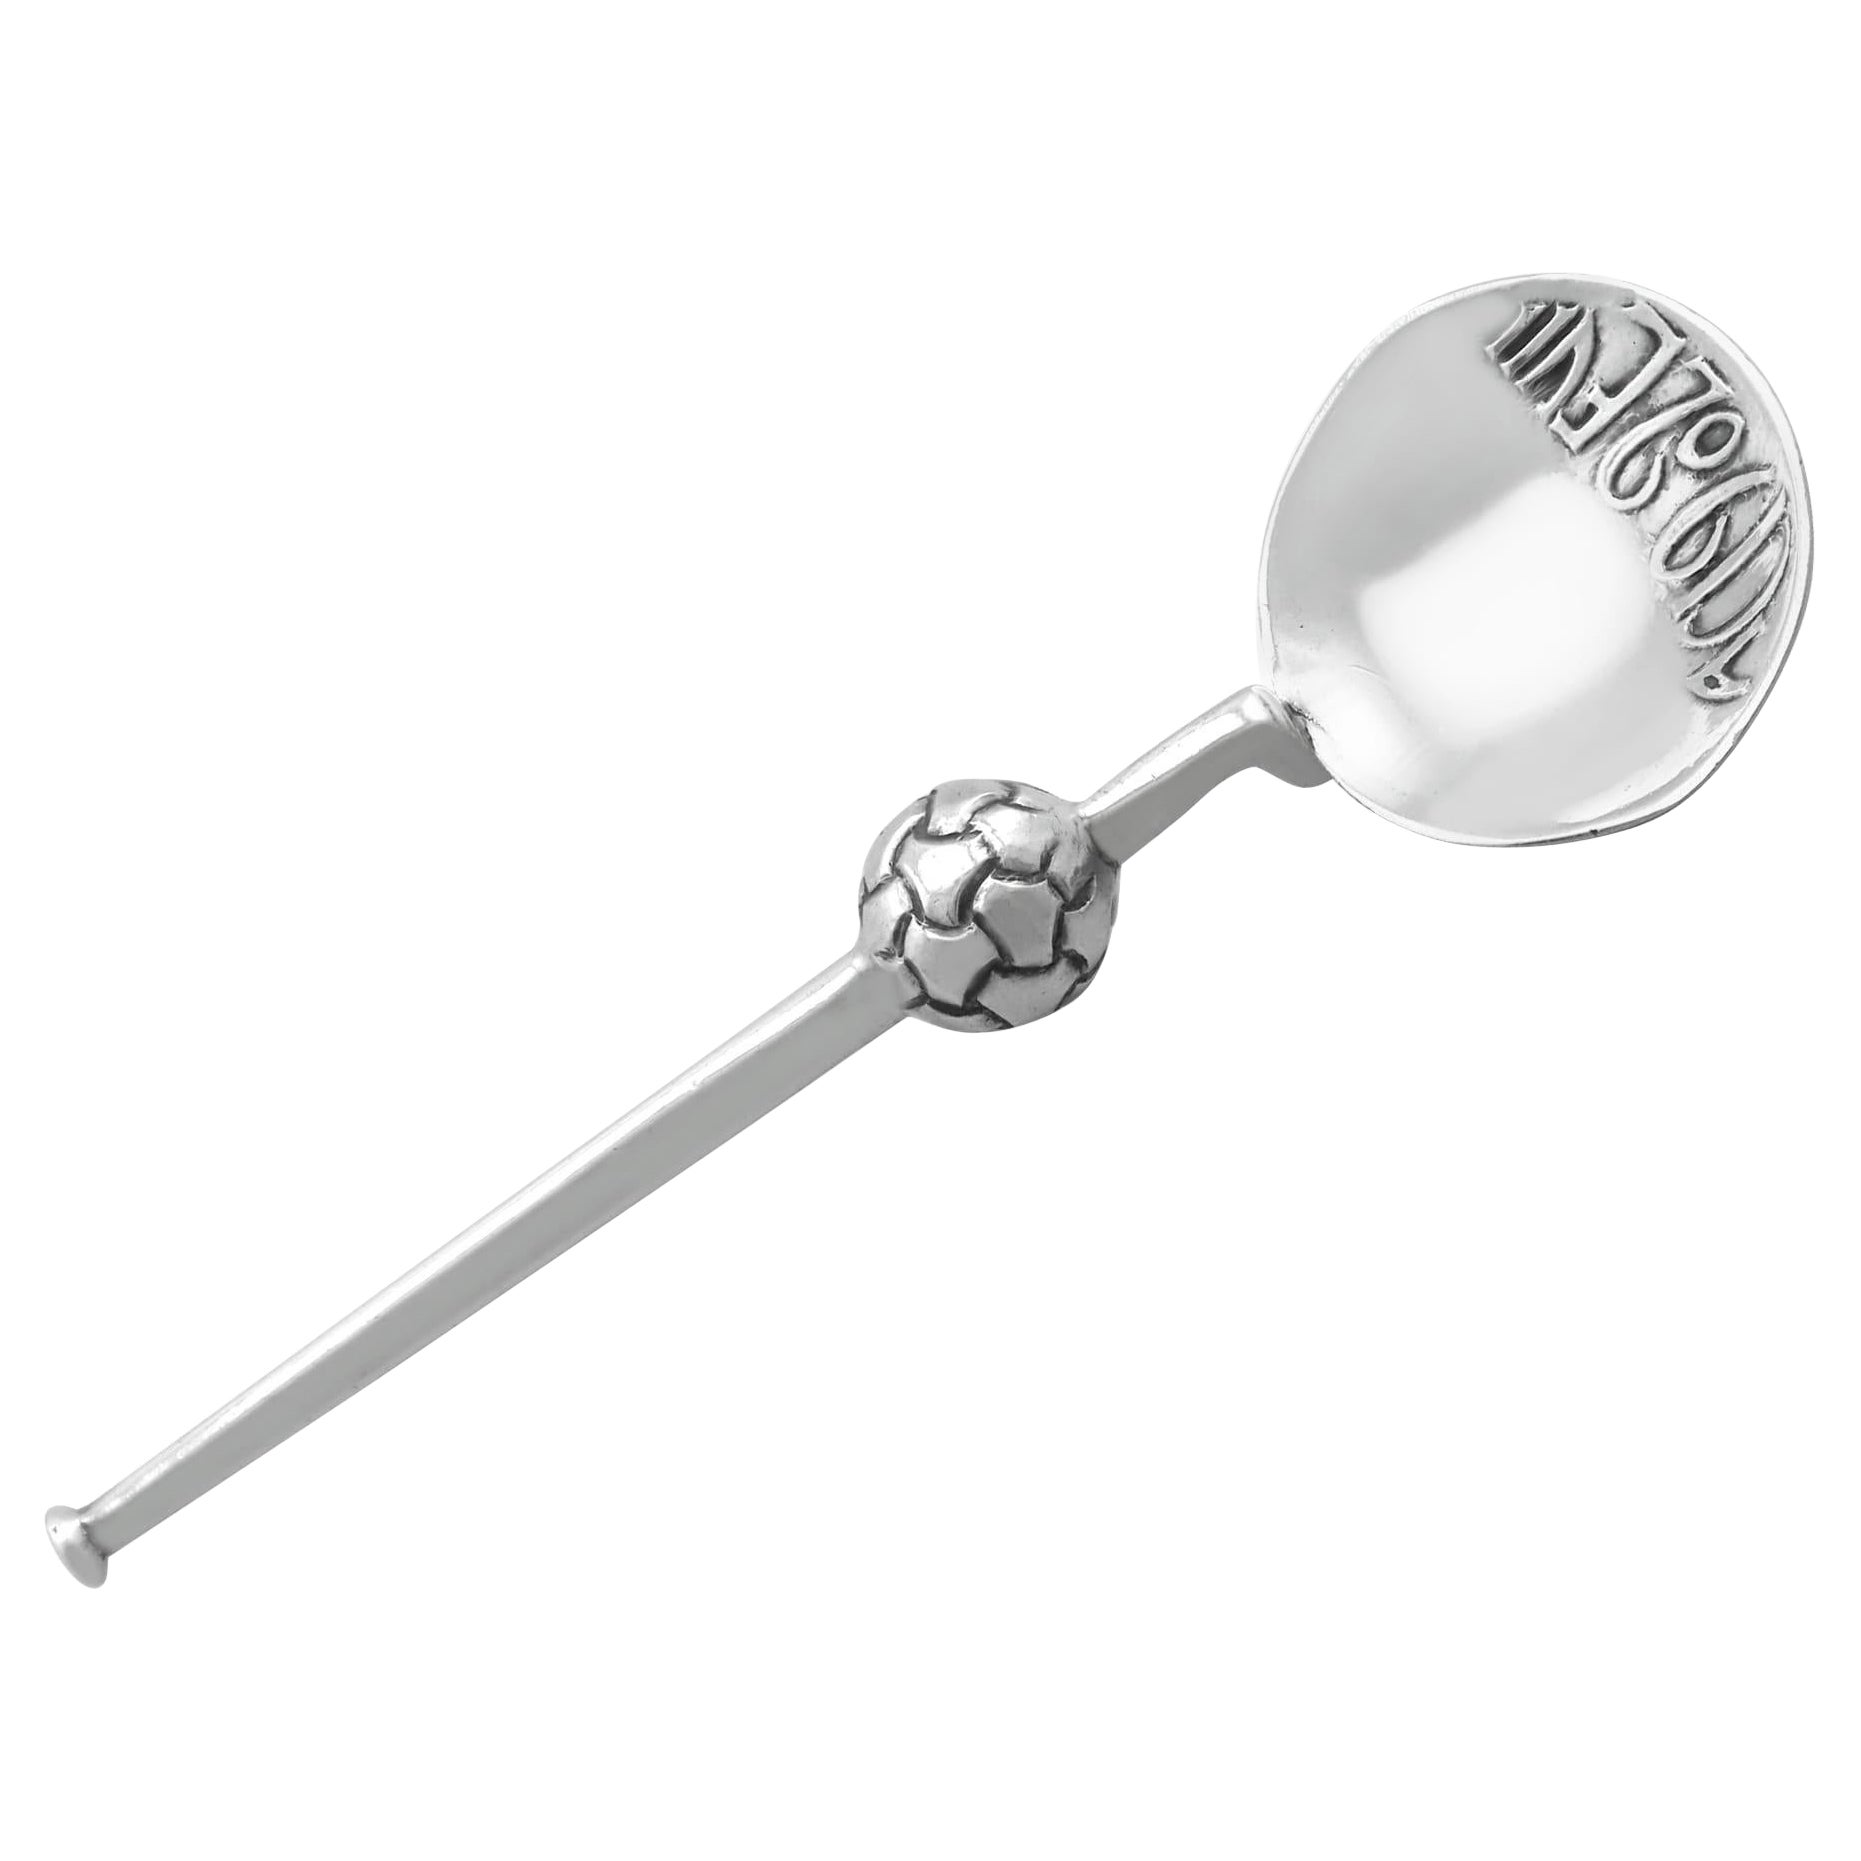 English Sterling Silver Coronation Spoon by Liberty & Co. Ltd